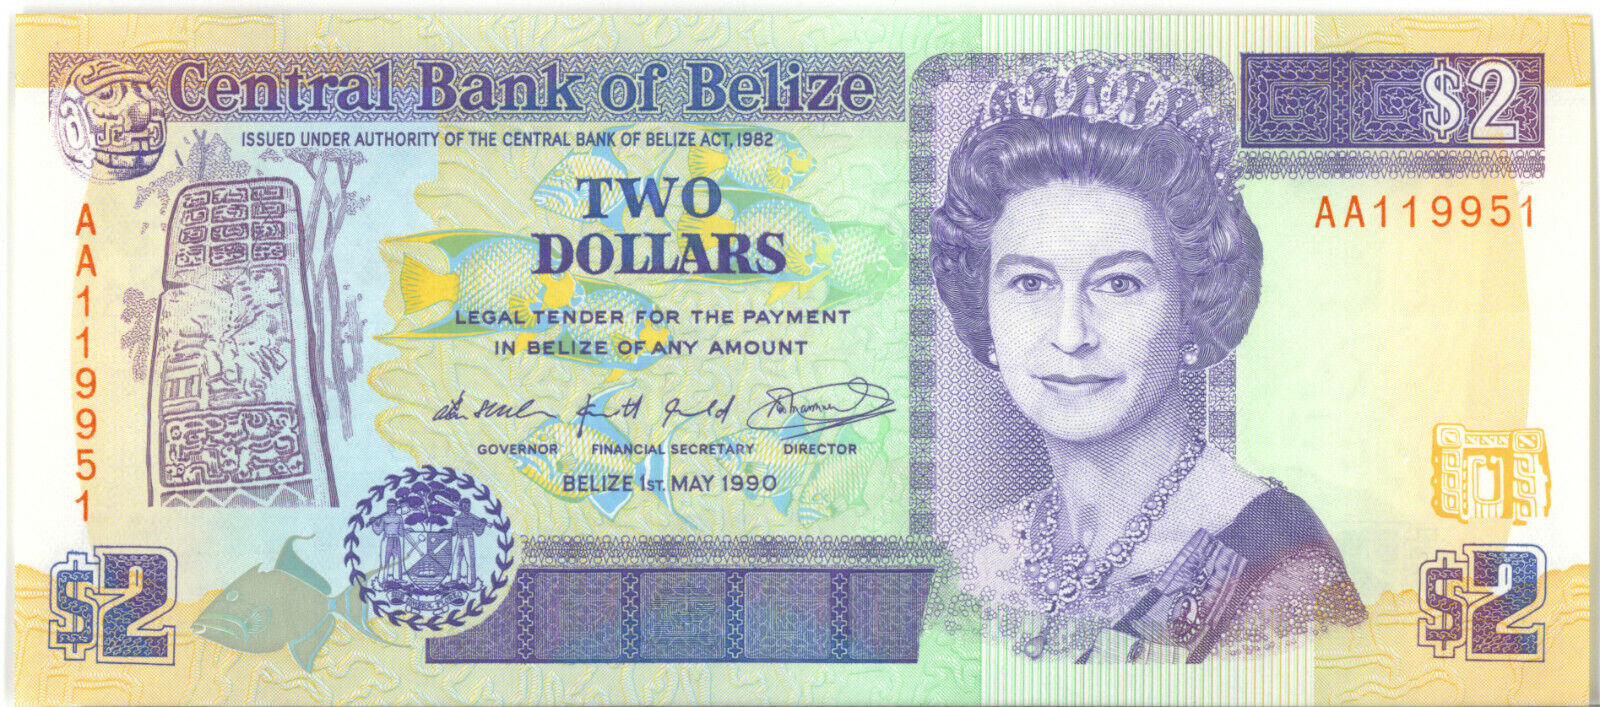 Belize Central Bank 1990 $2 Two Dollars P-52A GEM UNC Queen Elizabeth II